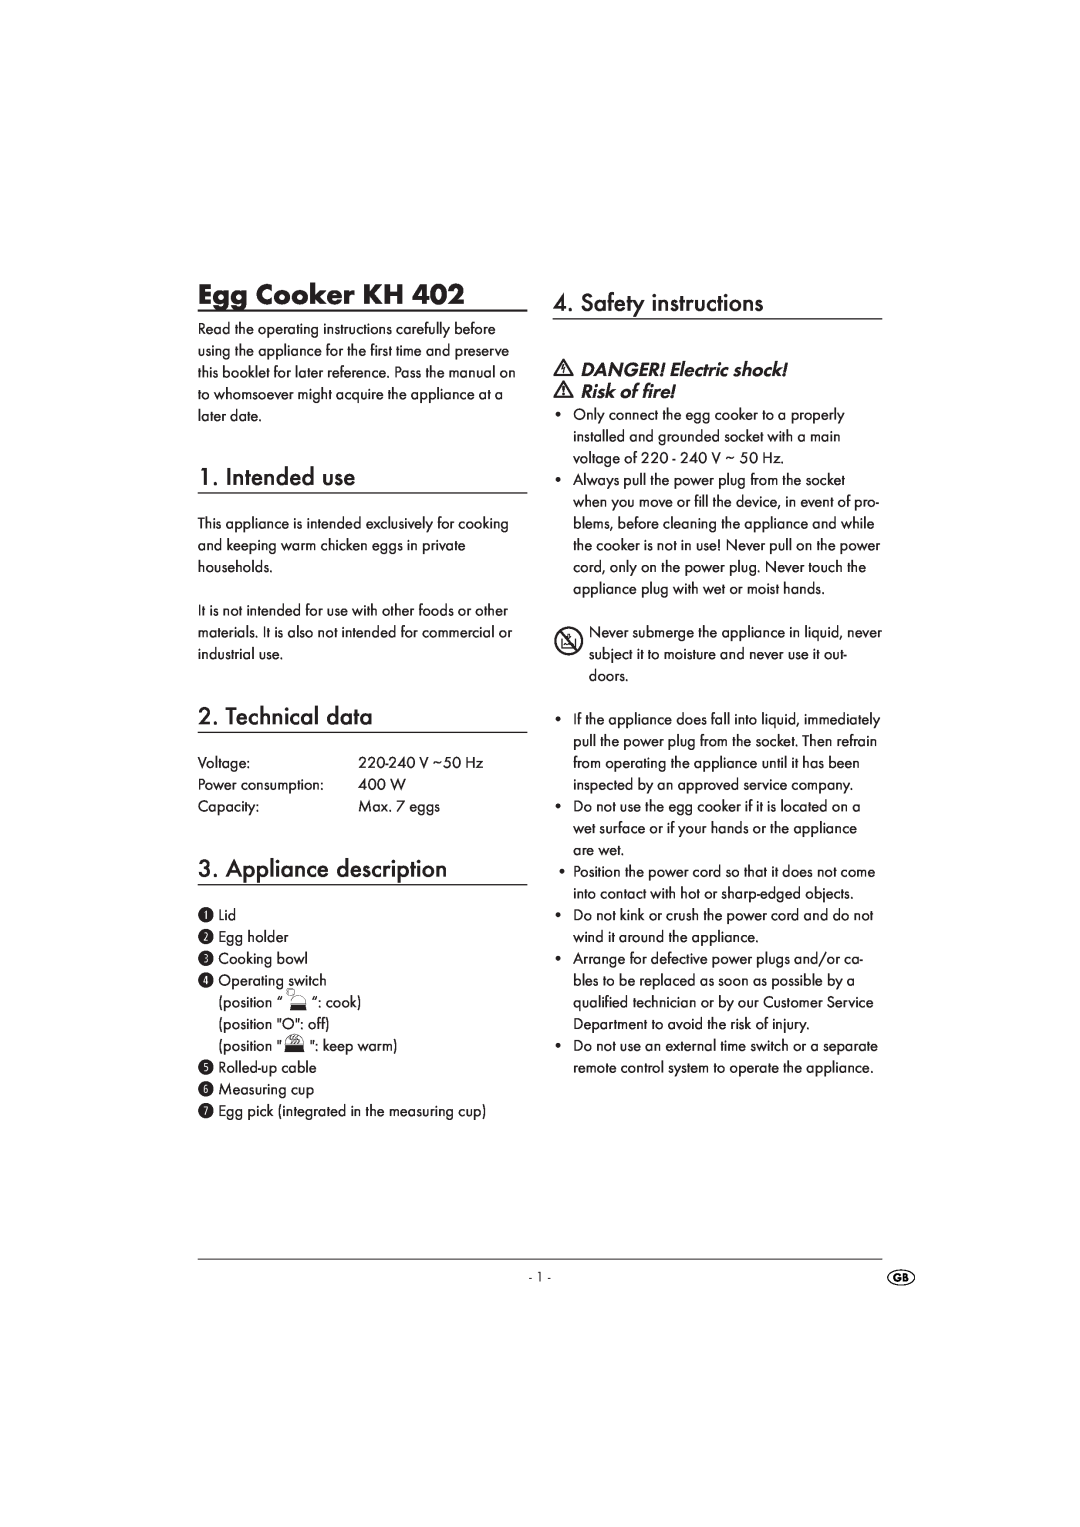 Kompernass KH402 manual Intended use, Technical data, Appliance description, Safety instructions, Egg Cooker KH 